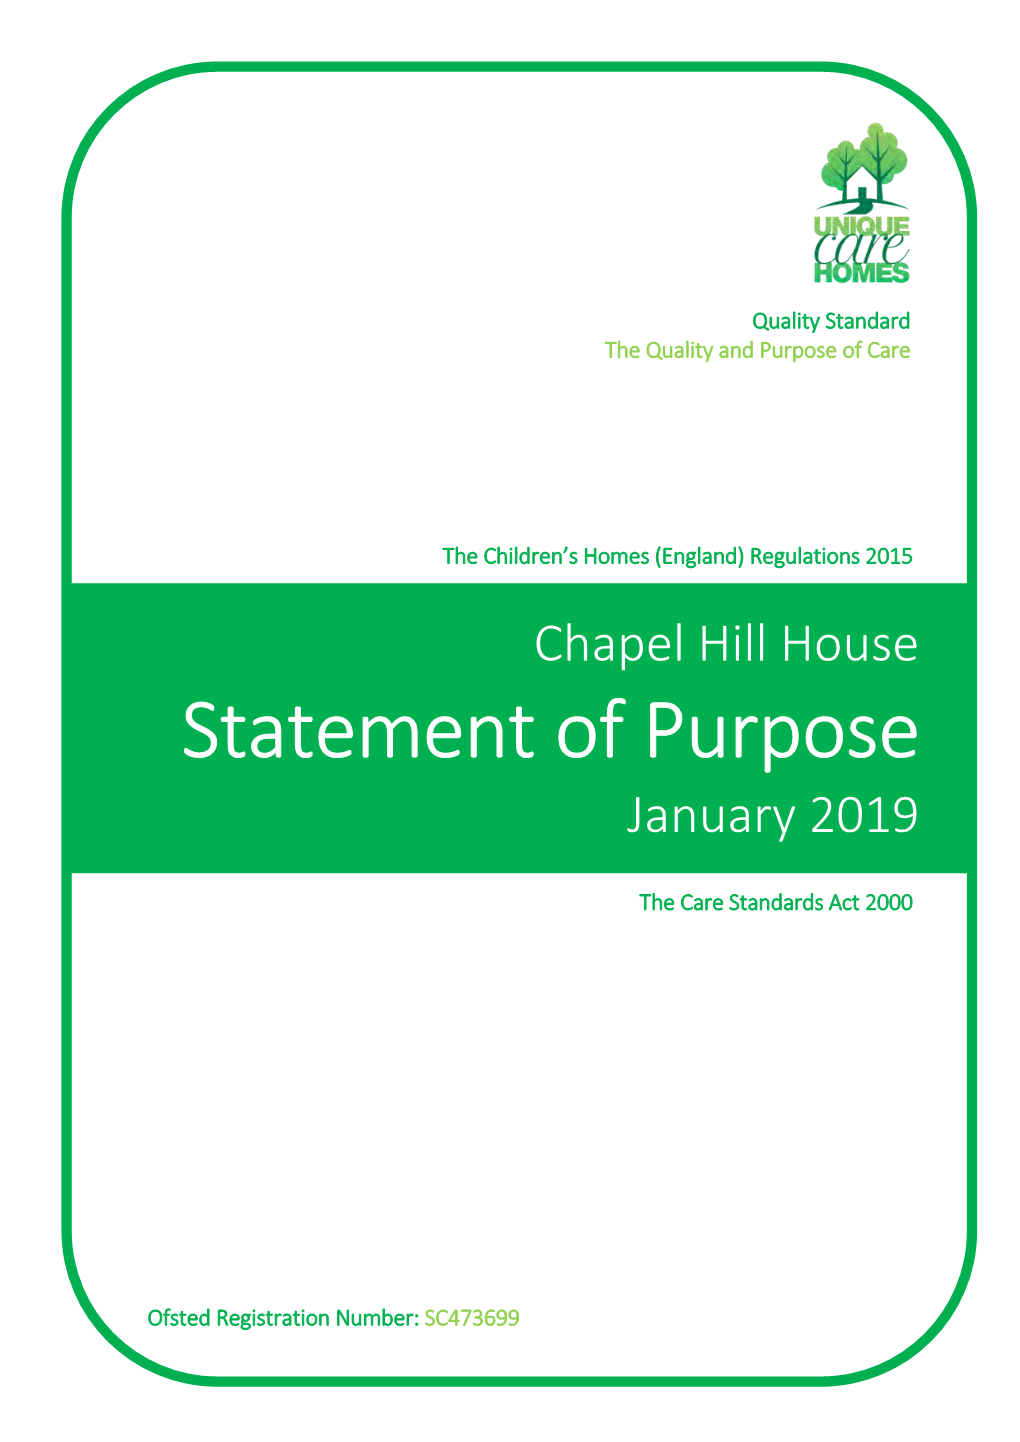 Statement of Purpose January 2019